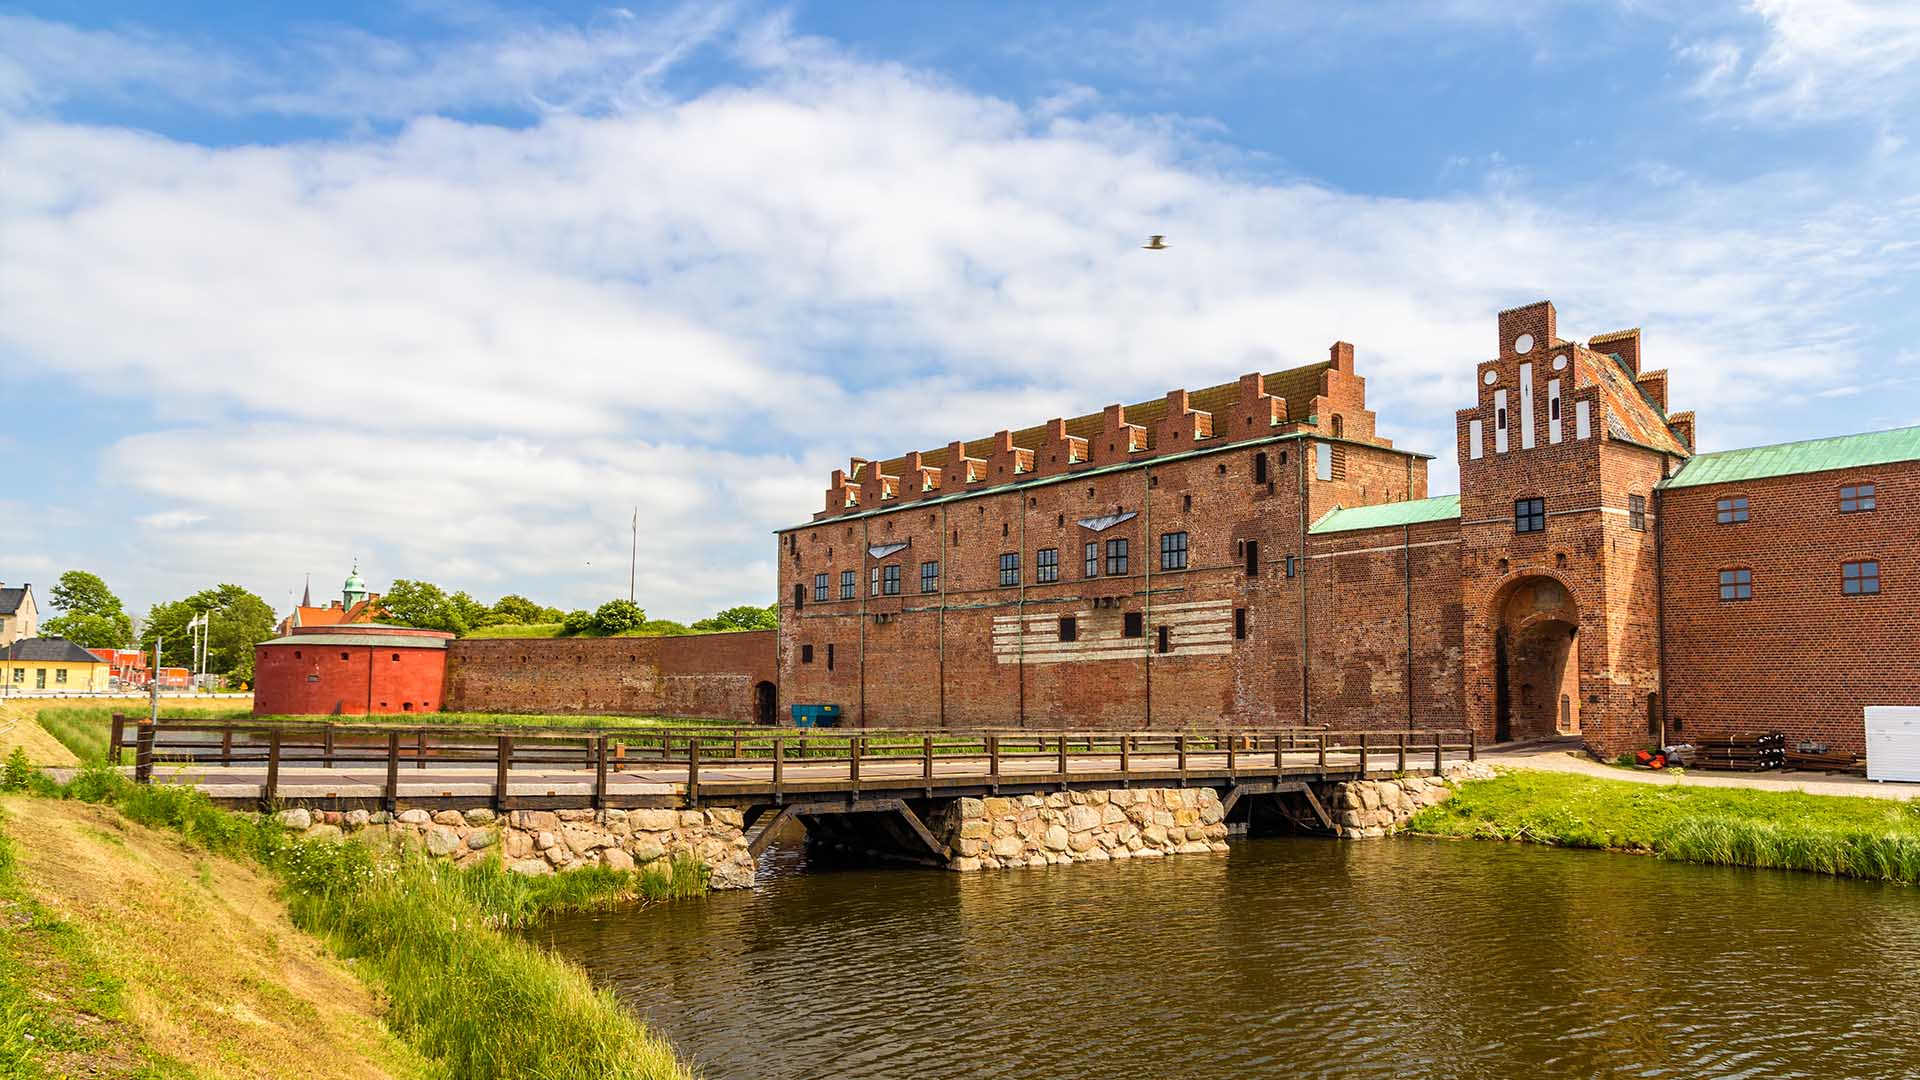 Malmöhus Castle in Malmö, Sweden